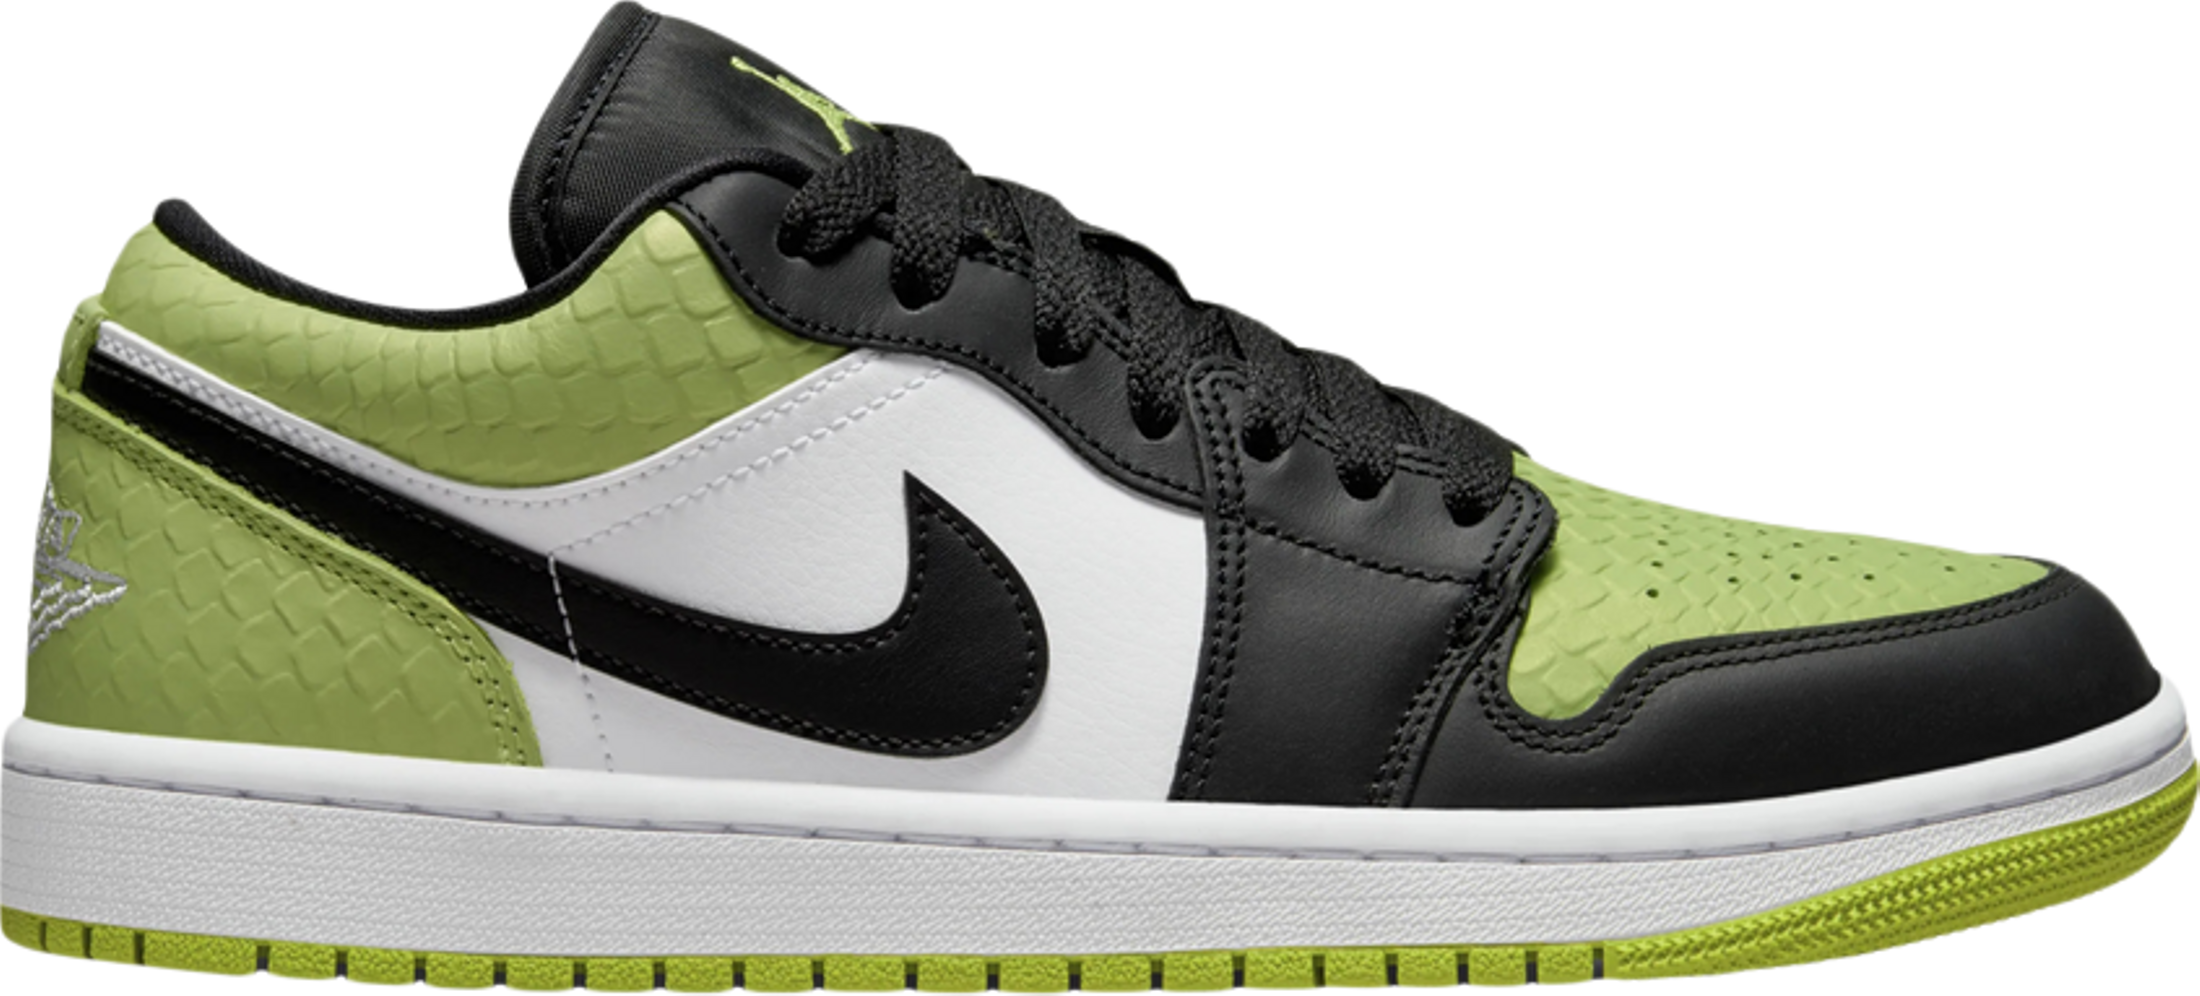 Air Jordan Wmns 1 Low SE Sneaker in Vivid Green Snakeskin - DX4446 301